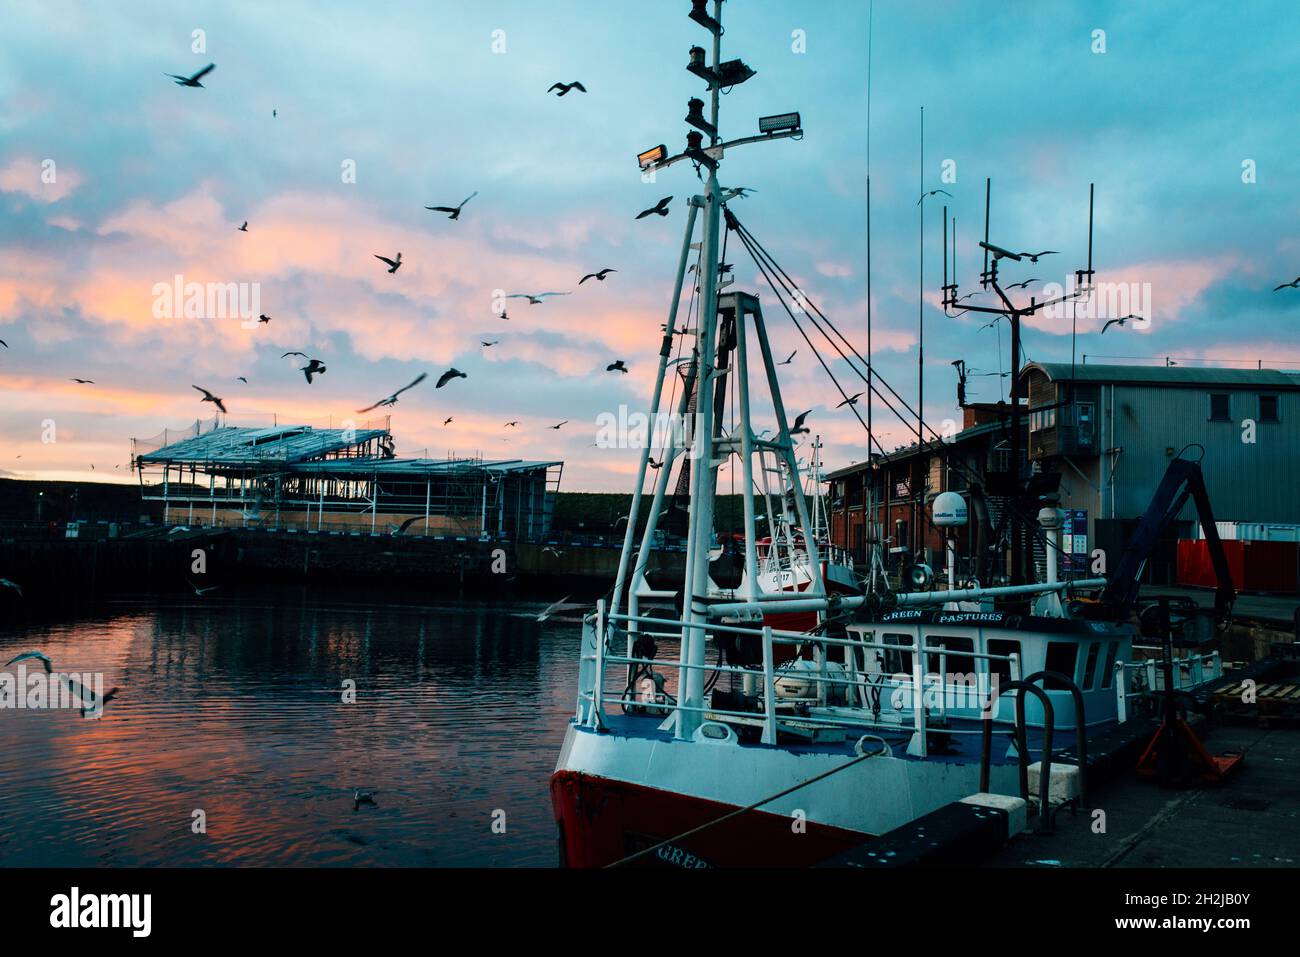 Sea birds flying around a fishing boat at eyemouth marina in scotland at sunset. Scottish fishing village Stock Photo